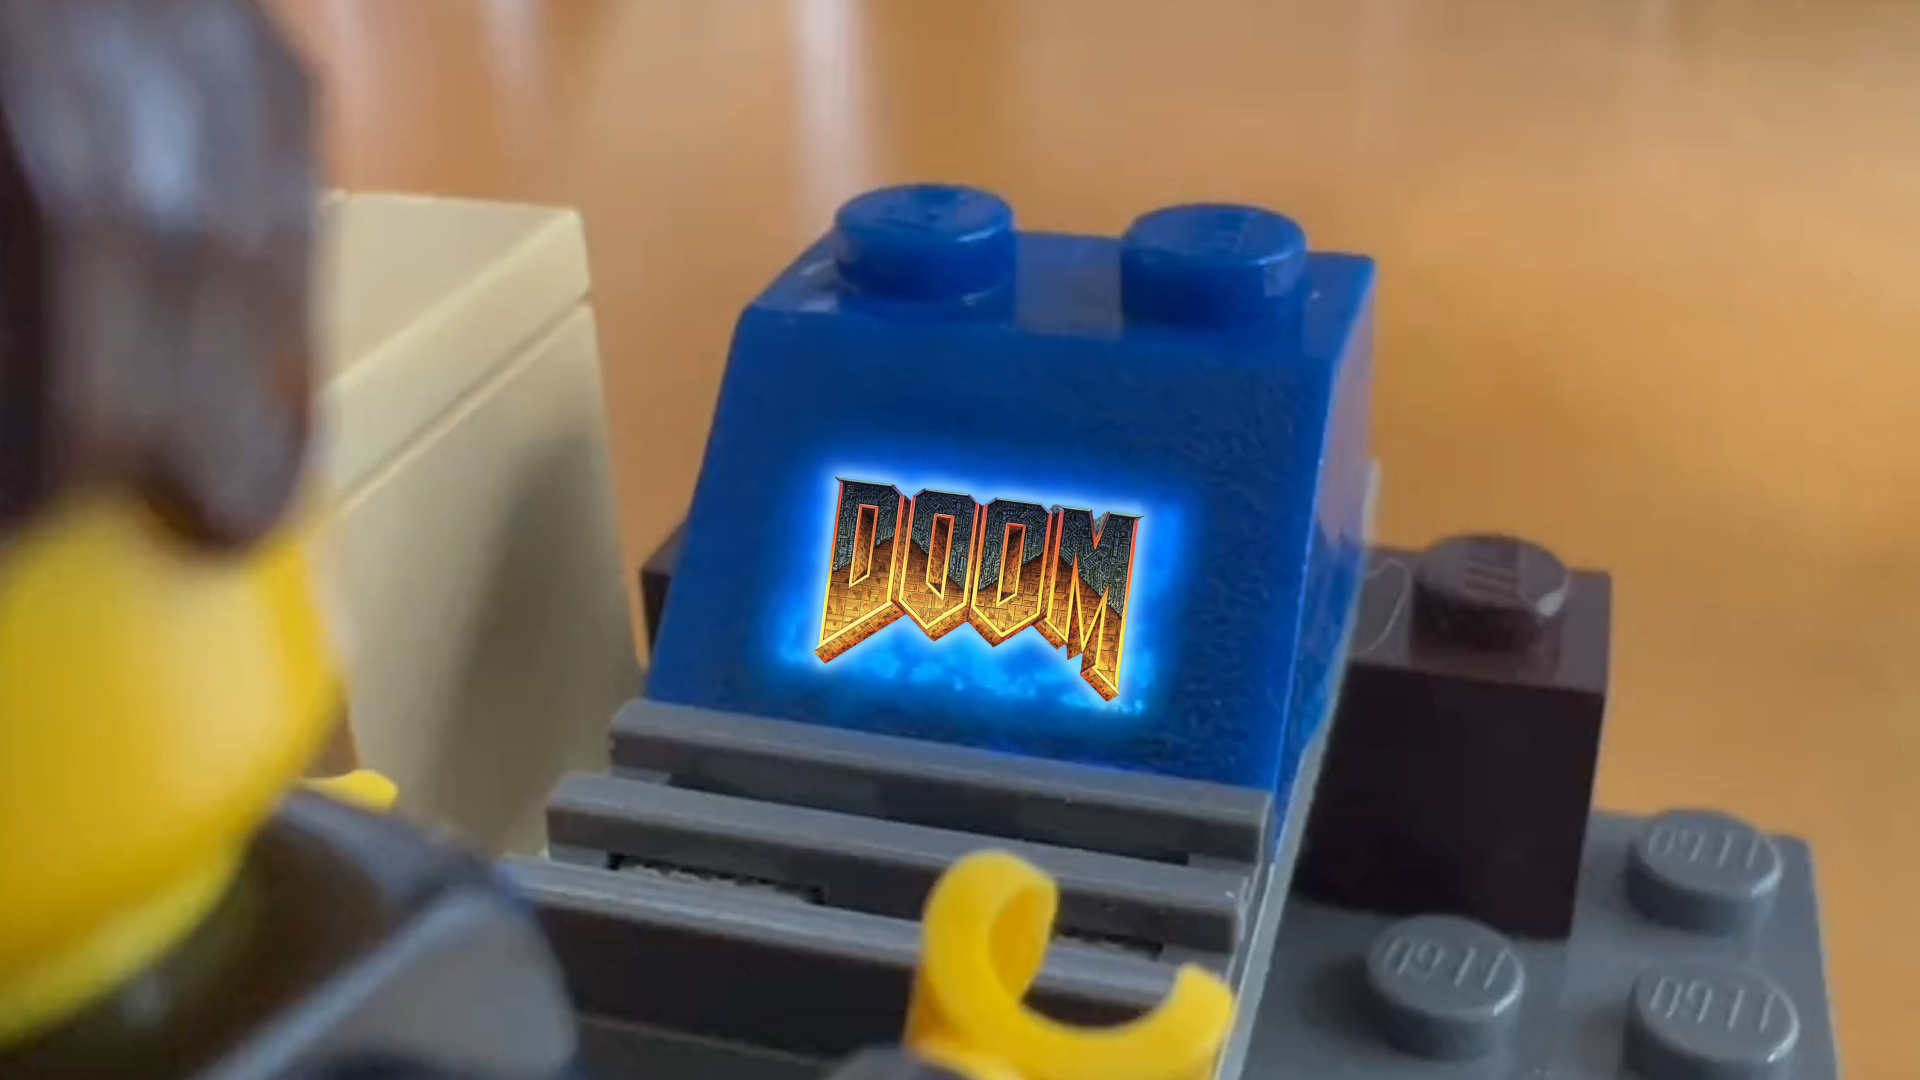 Modder creates a Lego brick gaming monitor, plays Doom on it